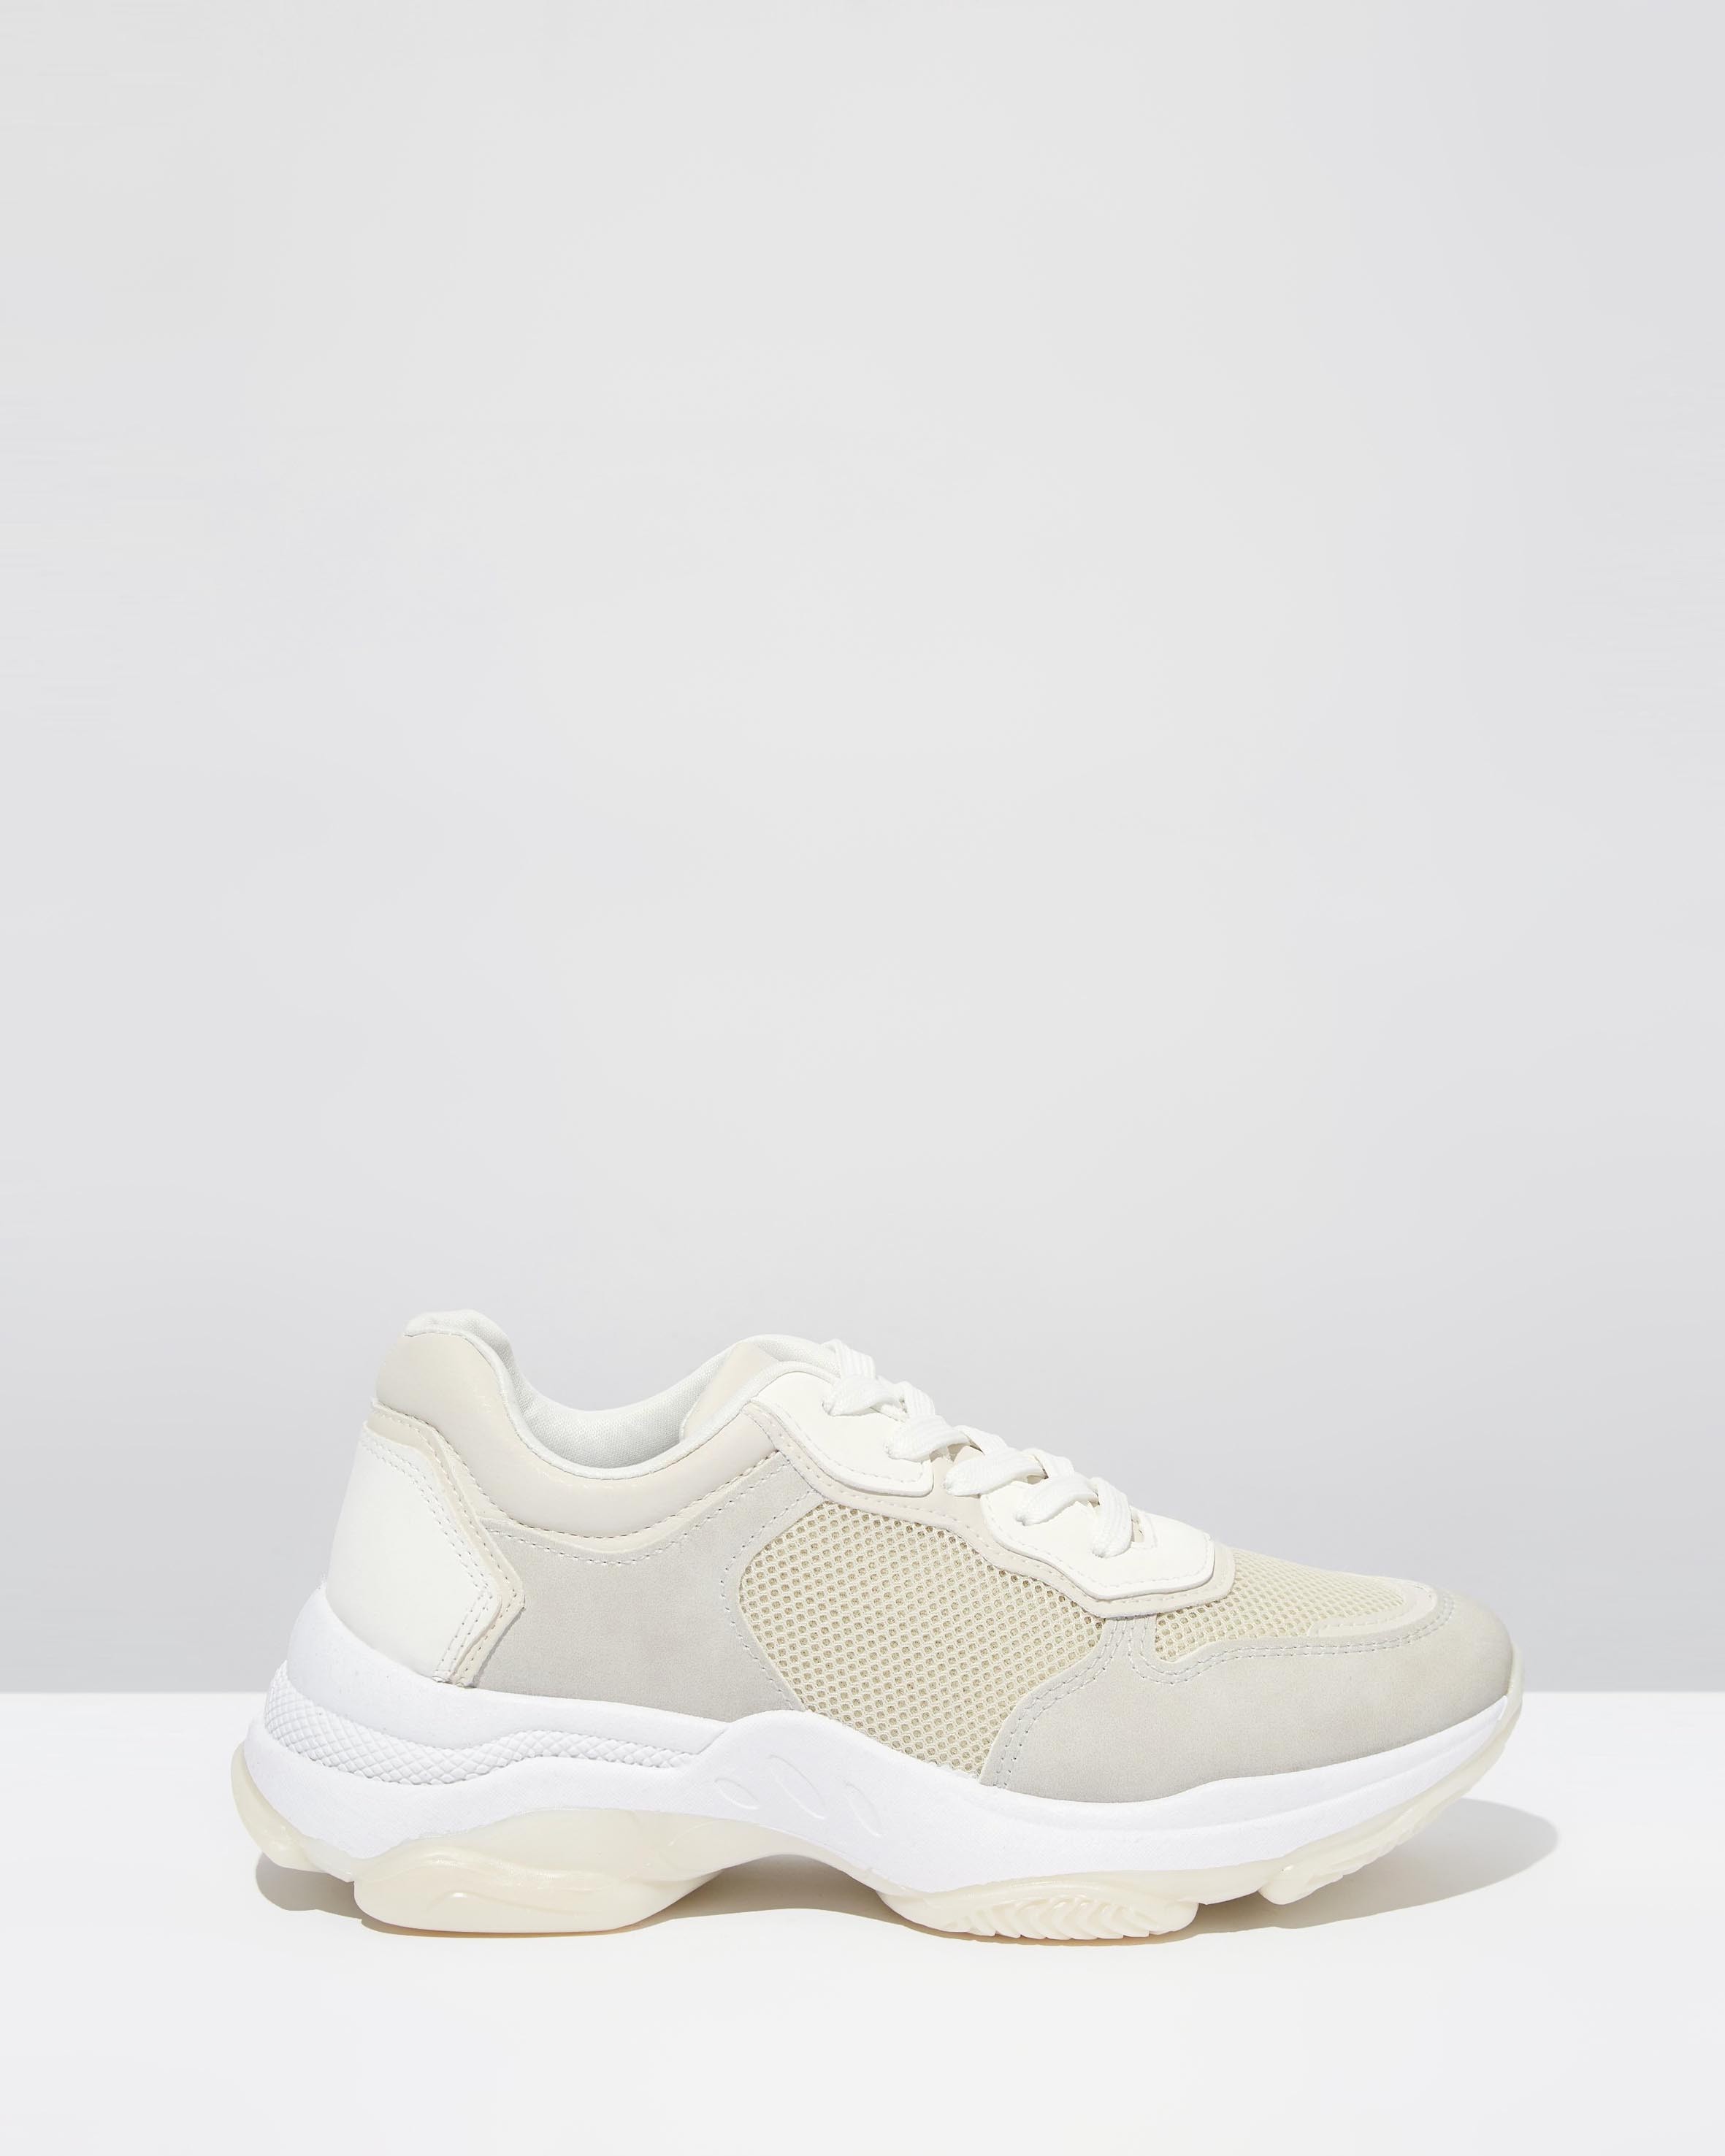 cream chunky sneakers